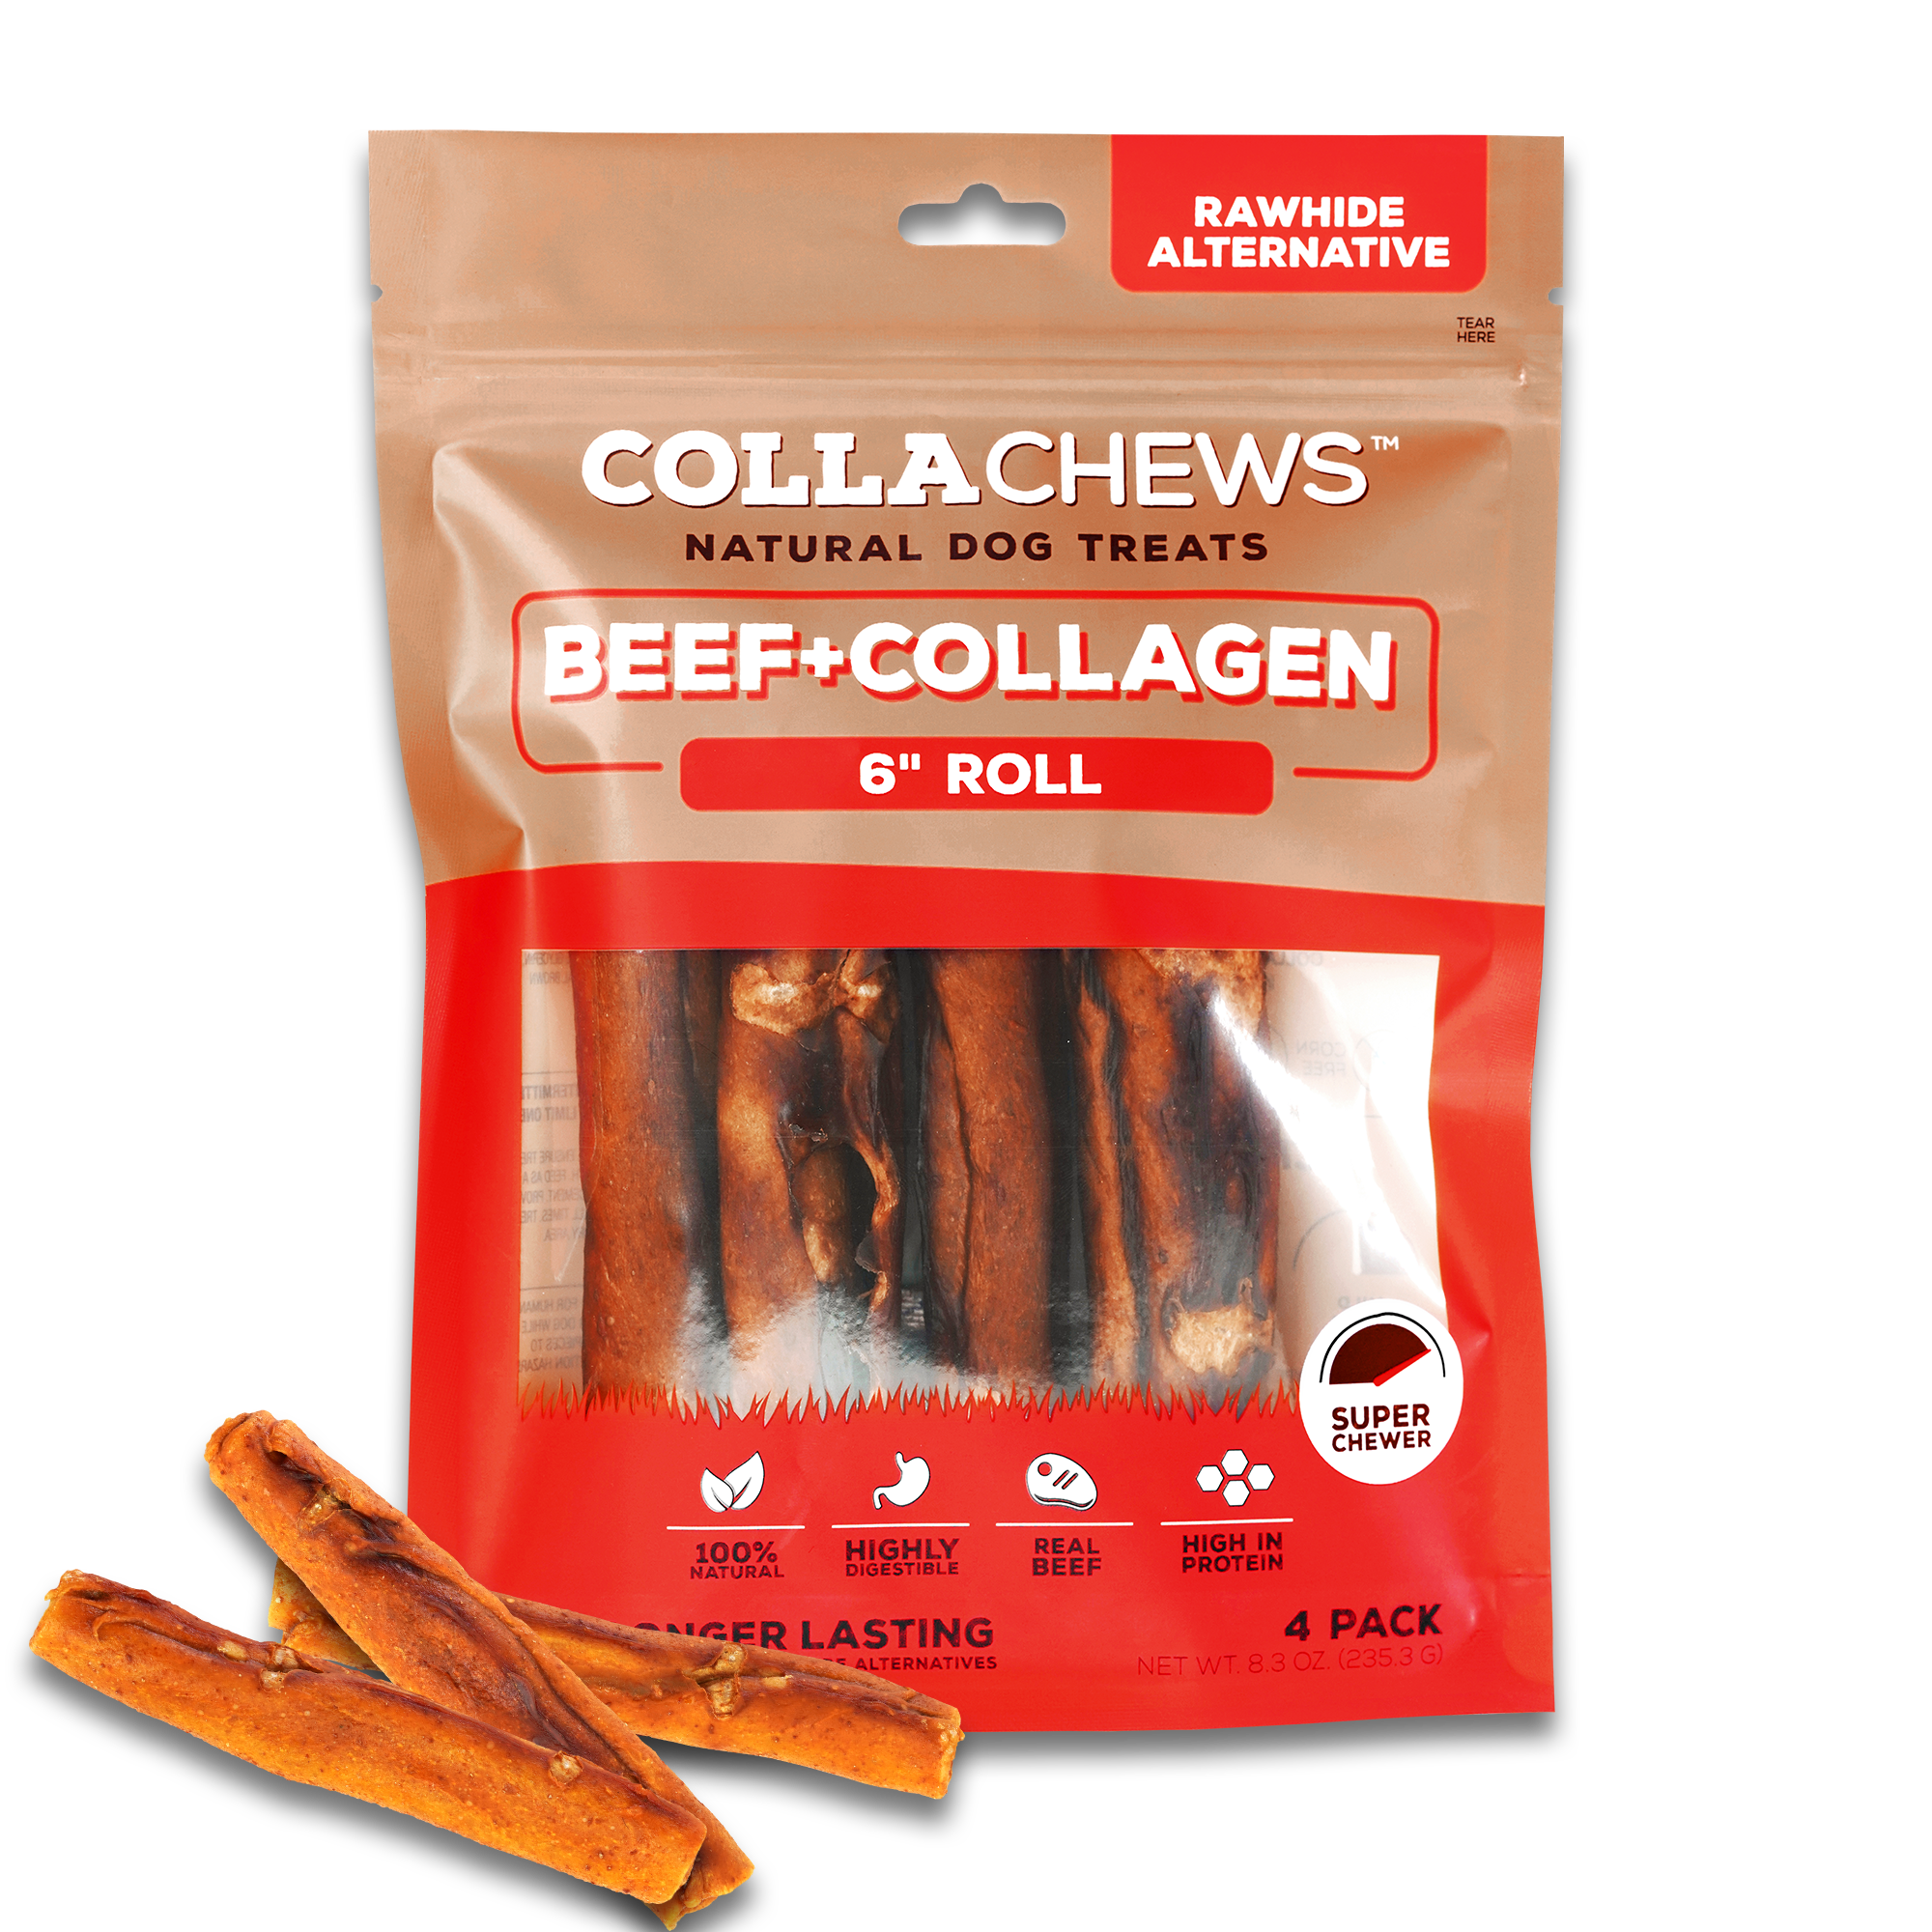 CollaChews Beef + Collagen 6" Rolls